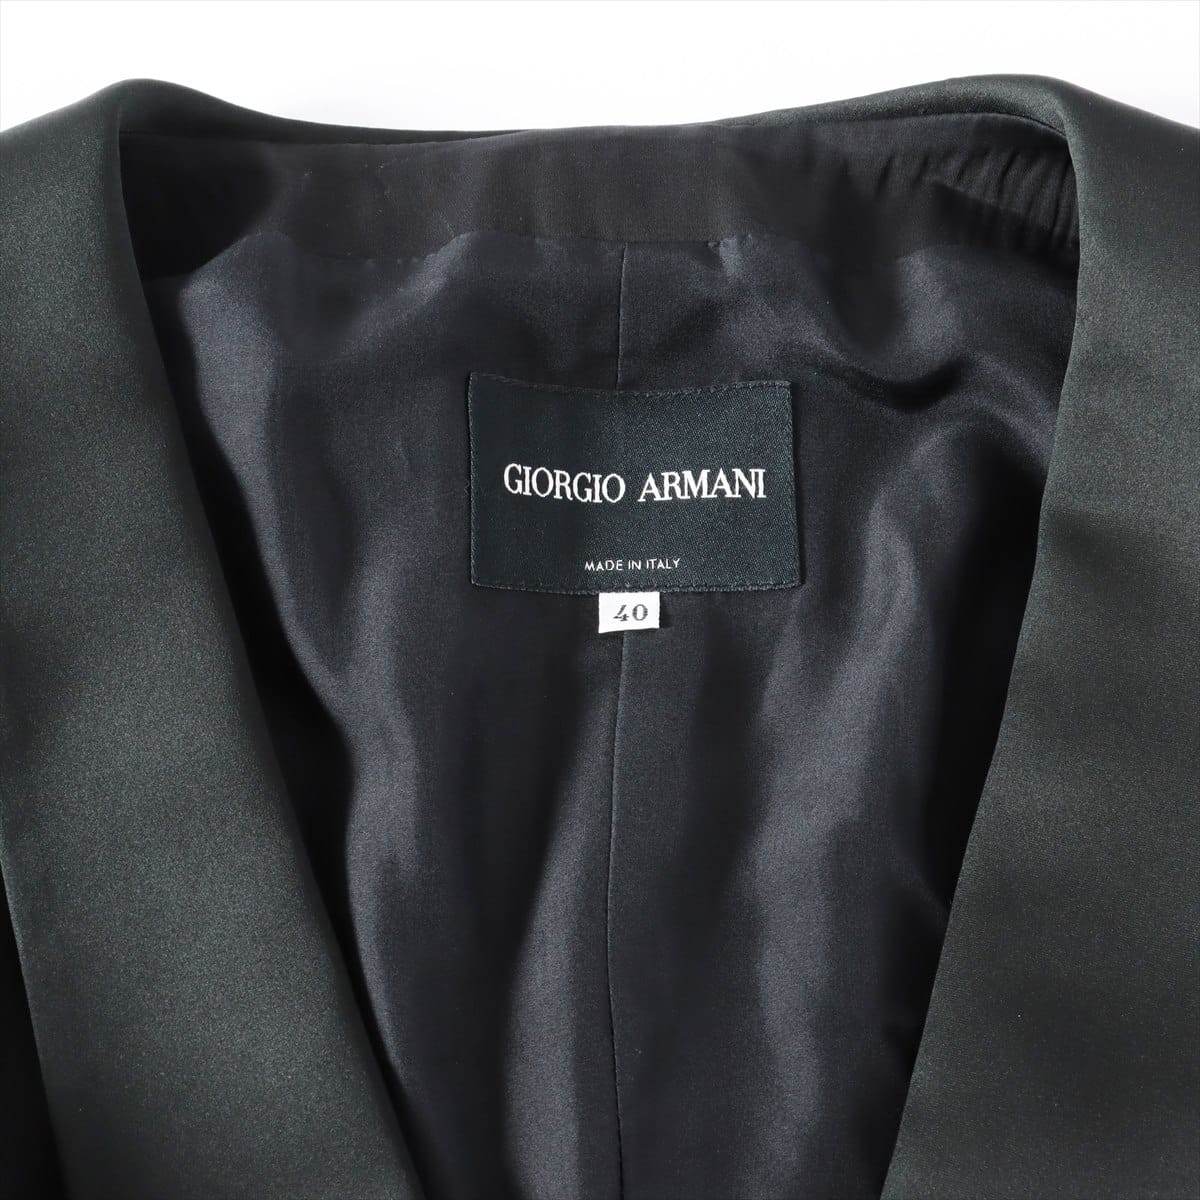 GIORGIO ARMANI Wool & silk Setup 40 Ladies' Black  shawl collar Short length